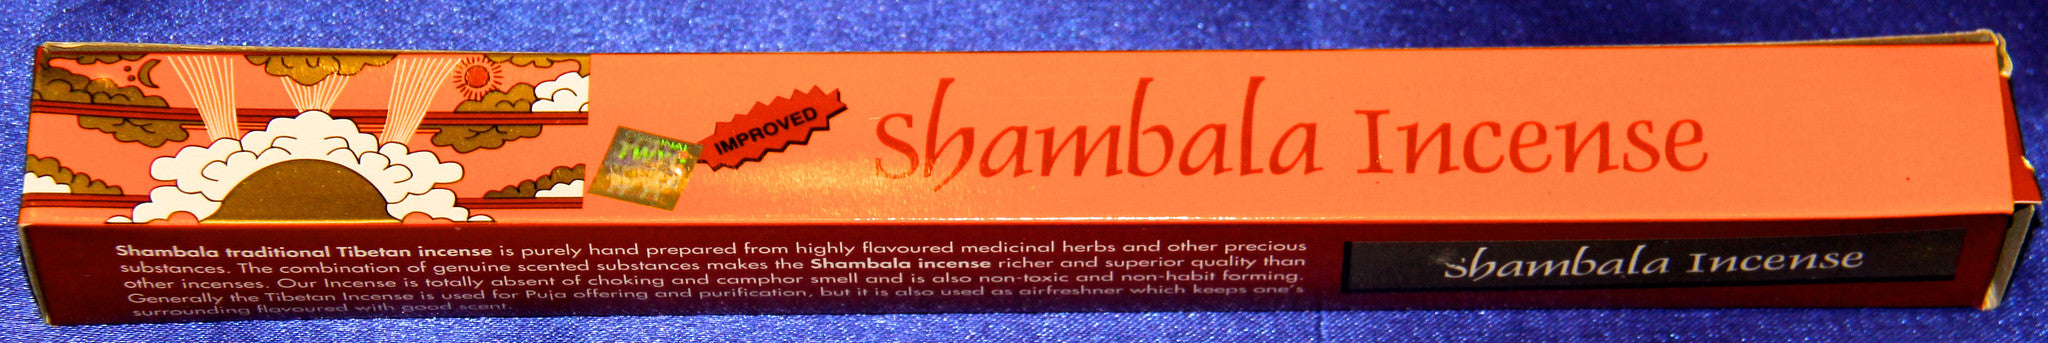 Shambhala Incense